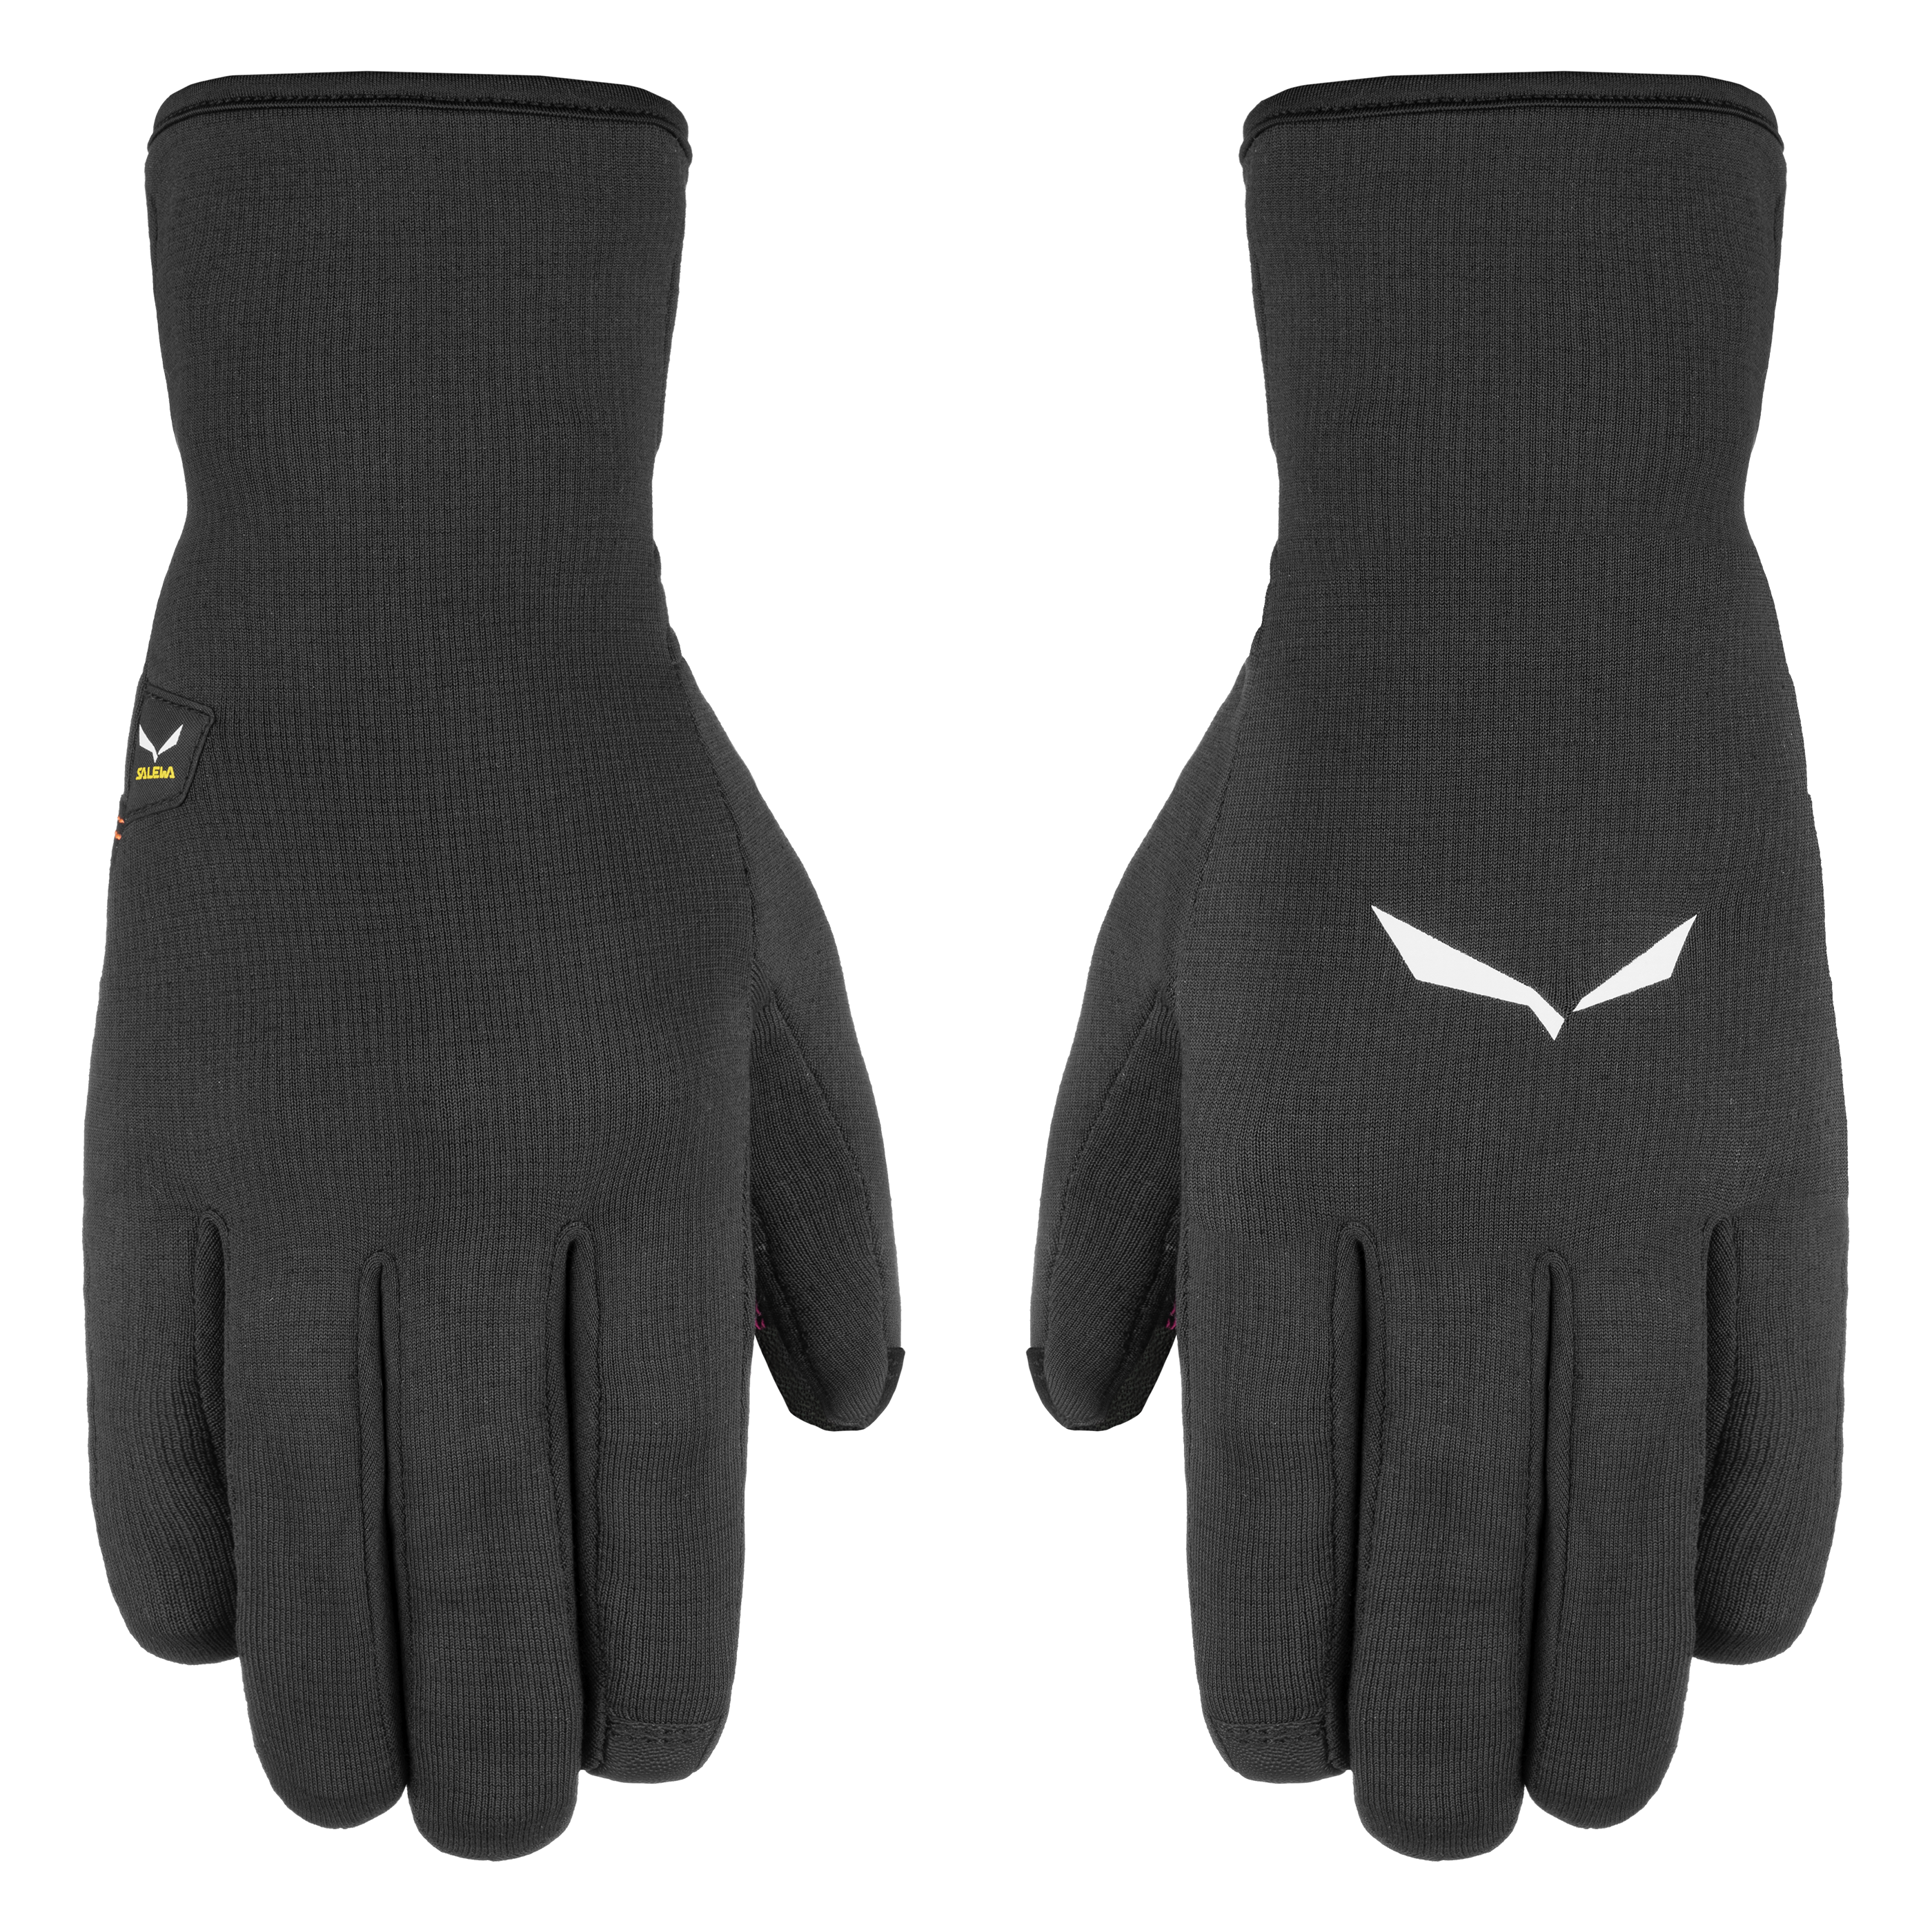 Ortles Polarlite Gloves Women